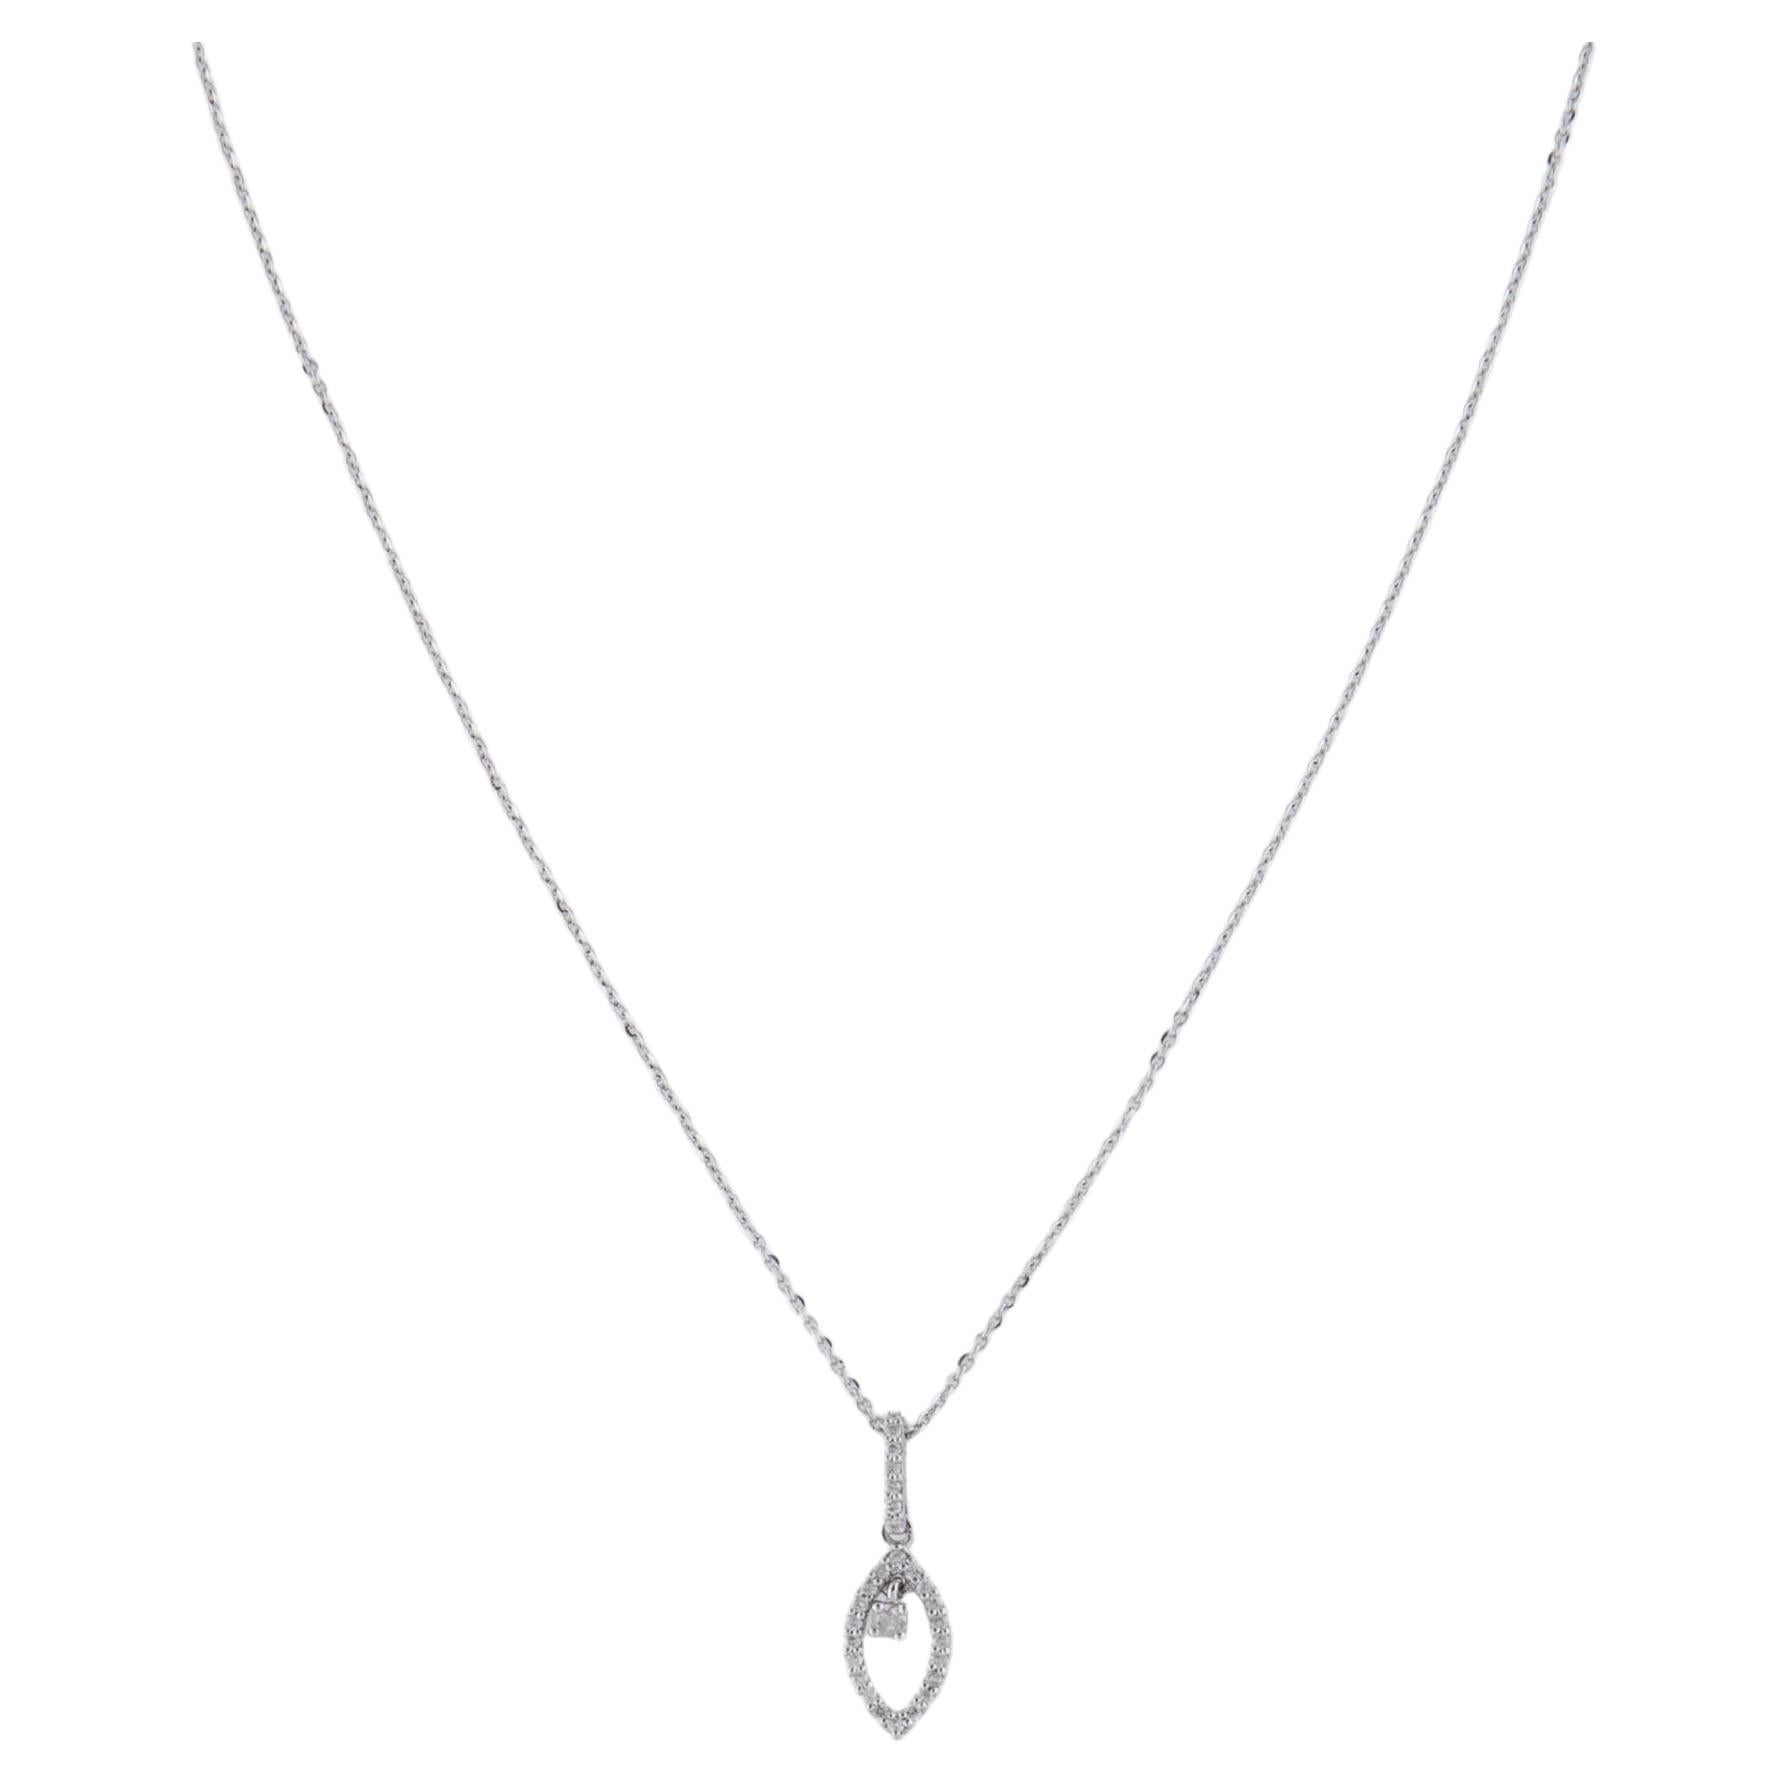 14K Diamond Pendant Necklace - Elegant & Timeless Statement Jewelry Piece For Sale